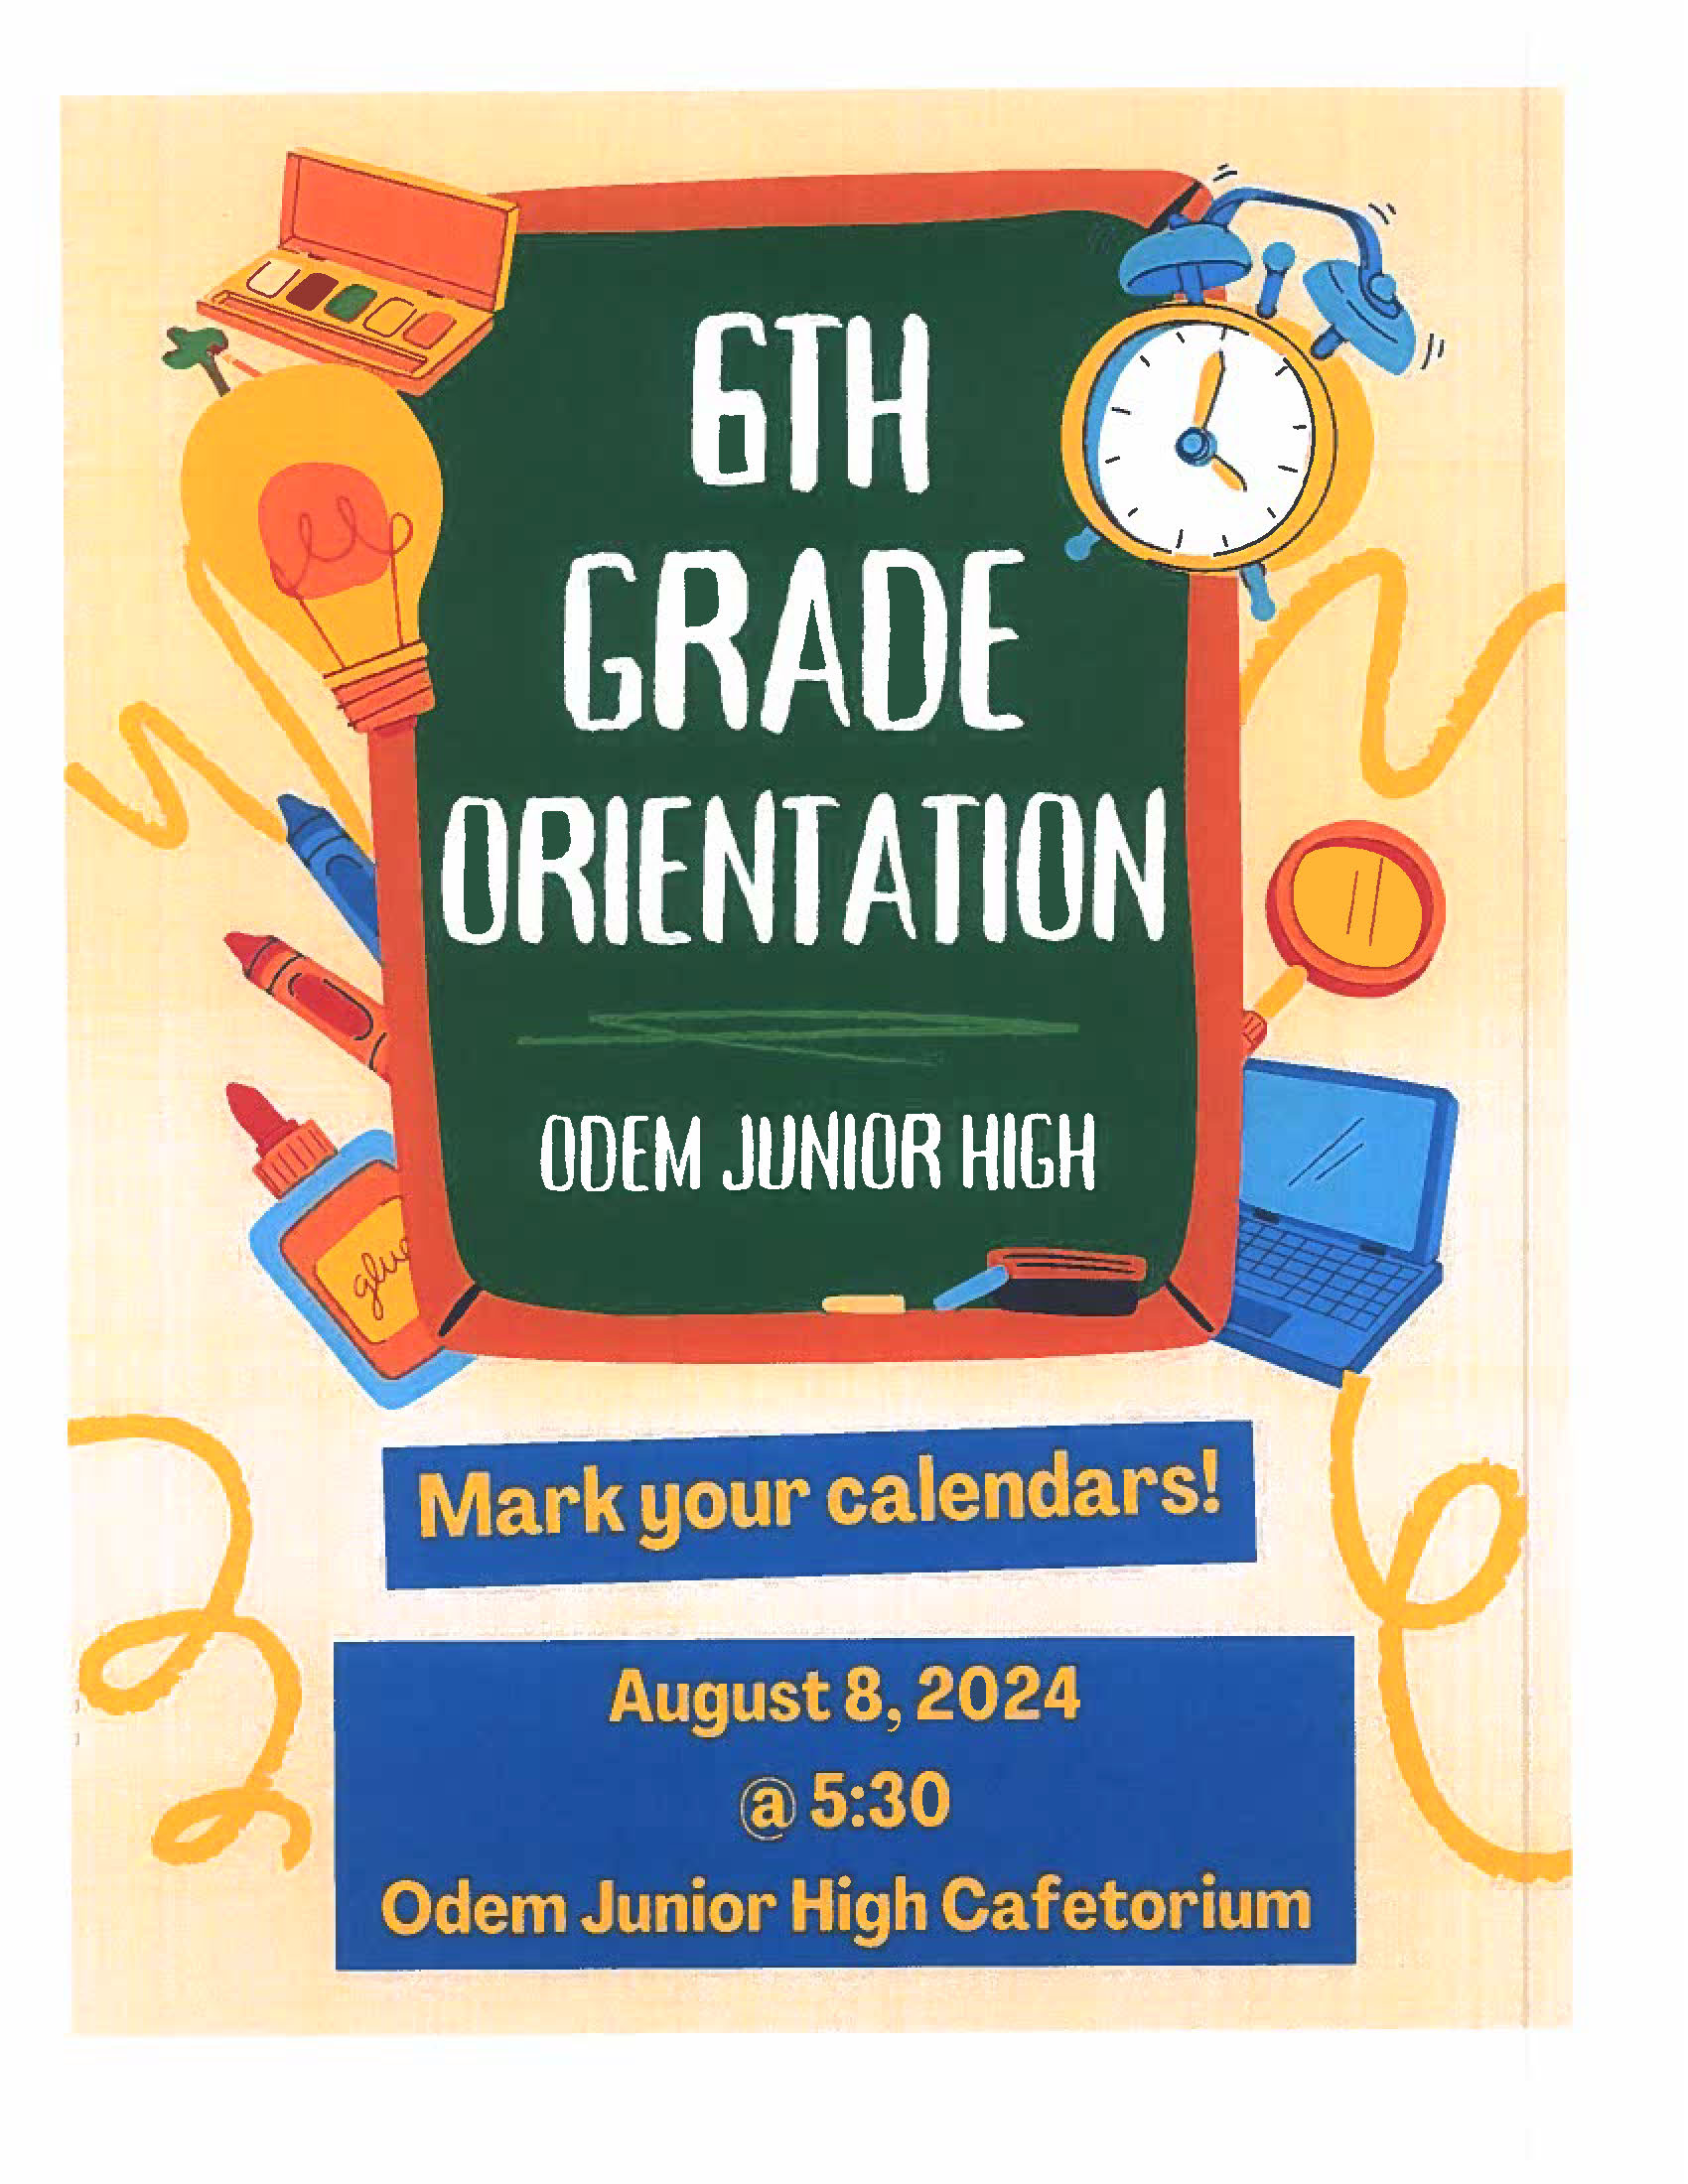 6th Grade Orientation flyer